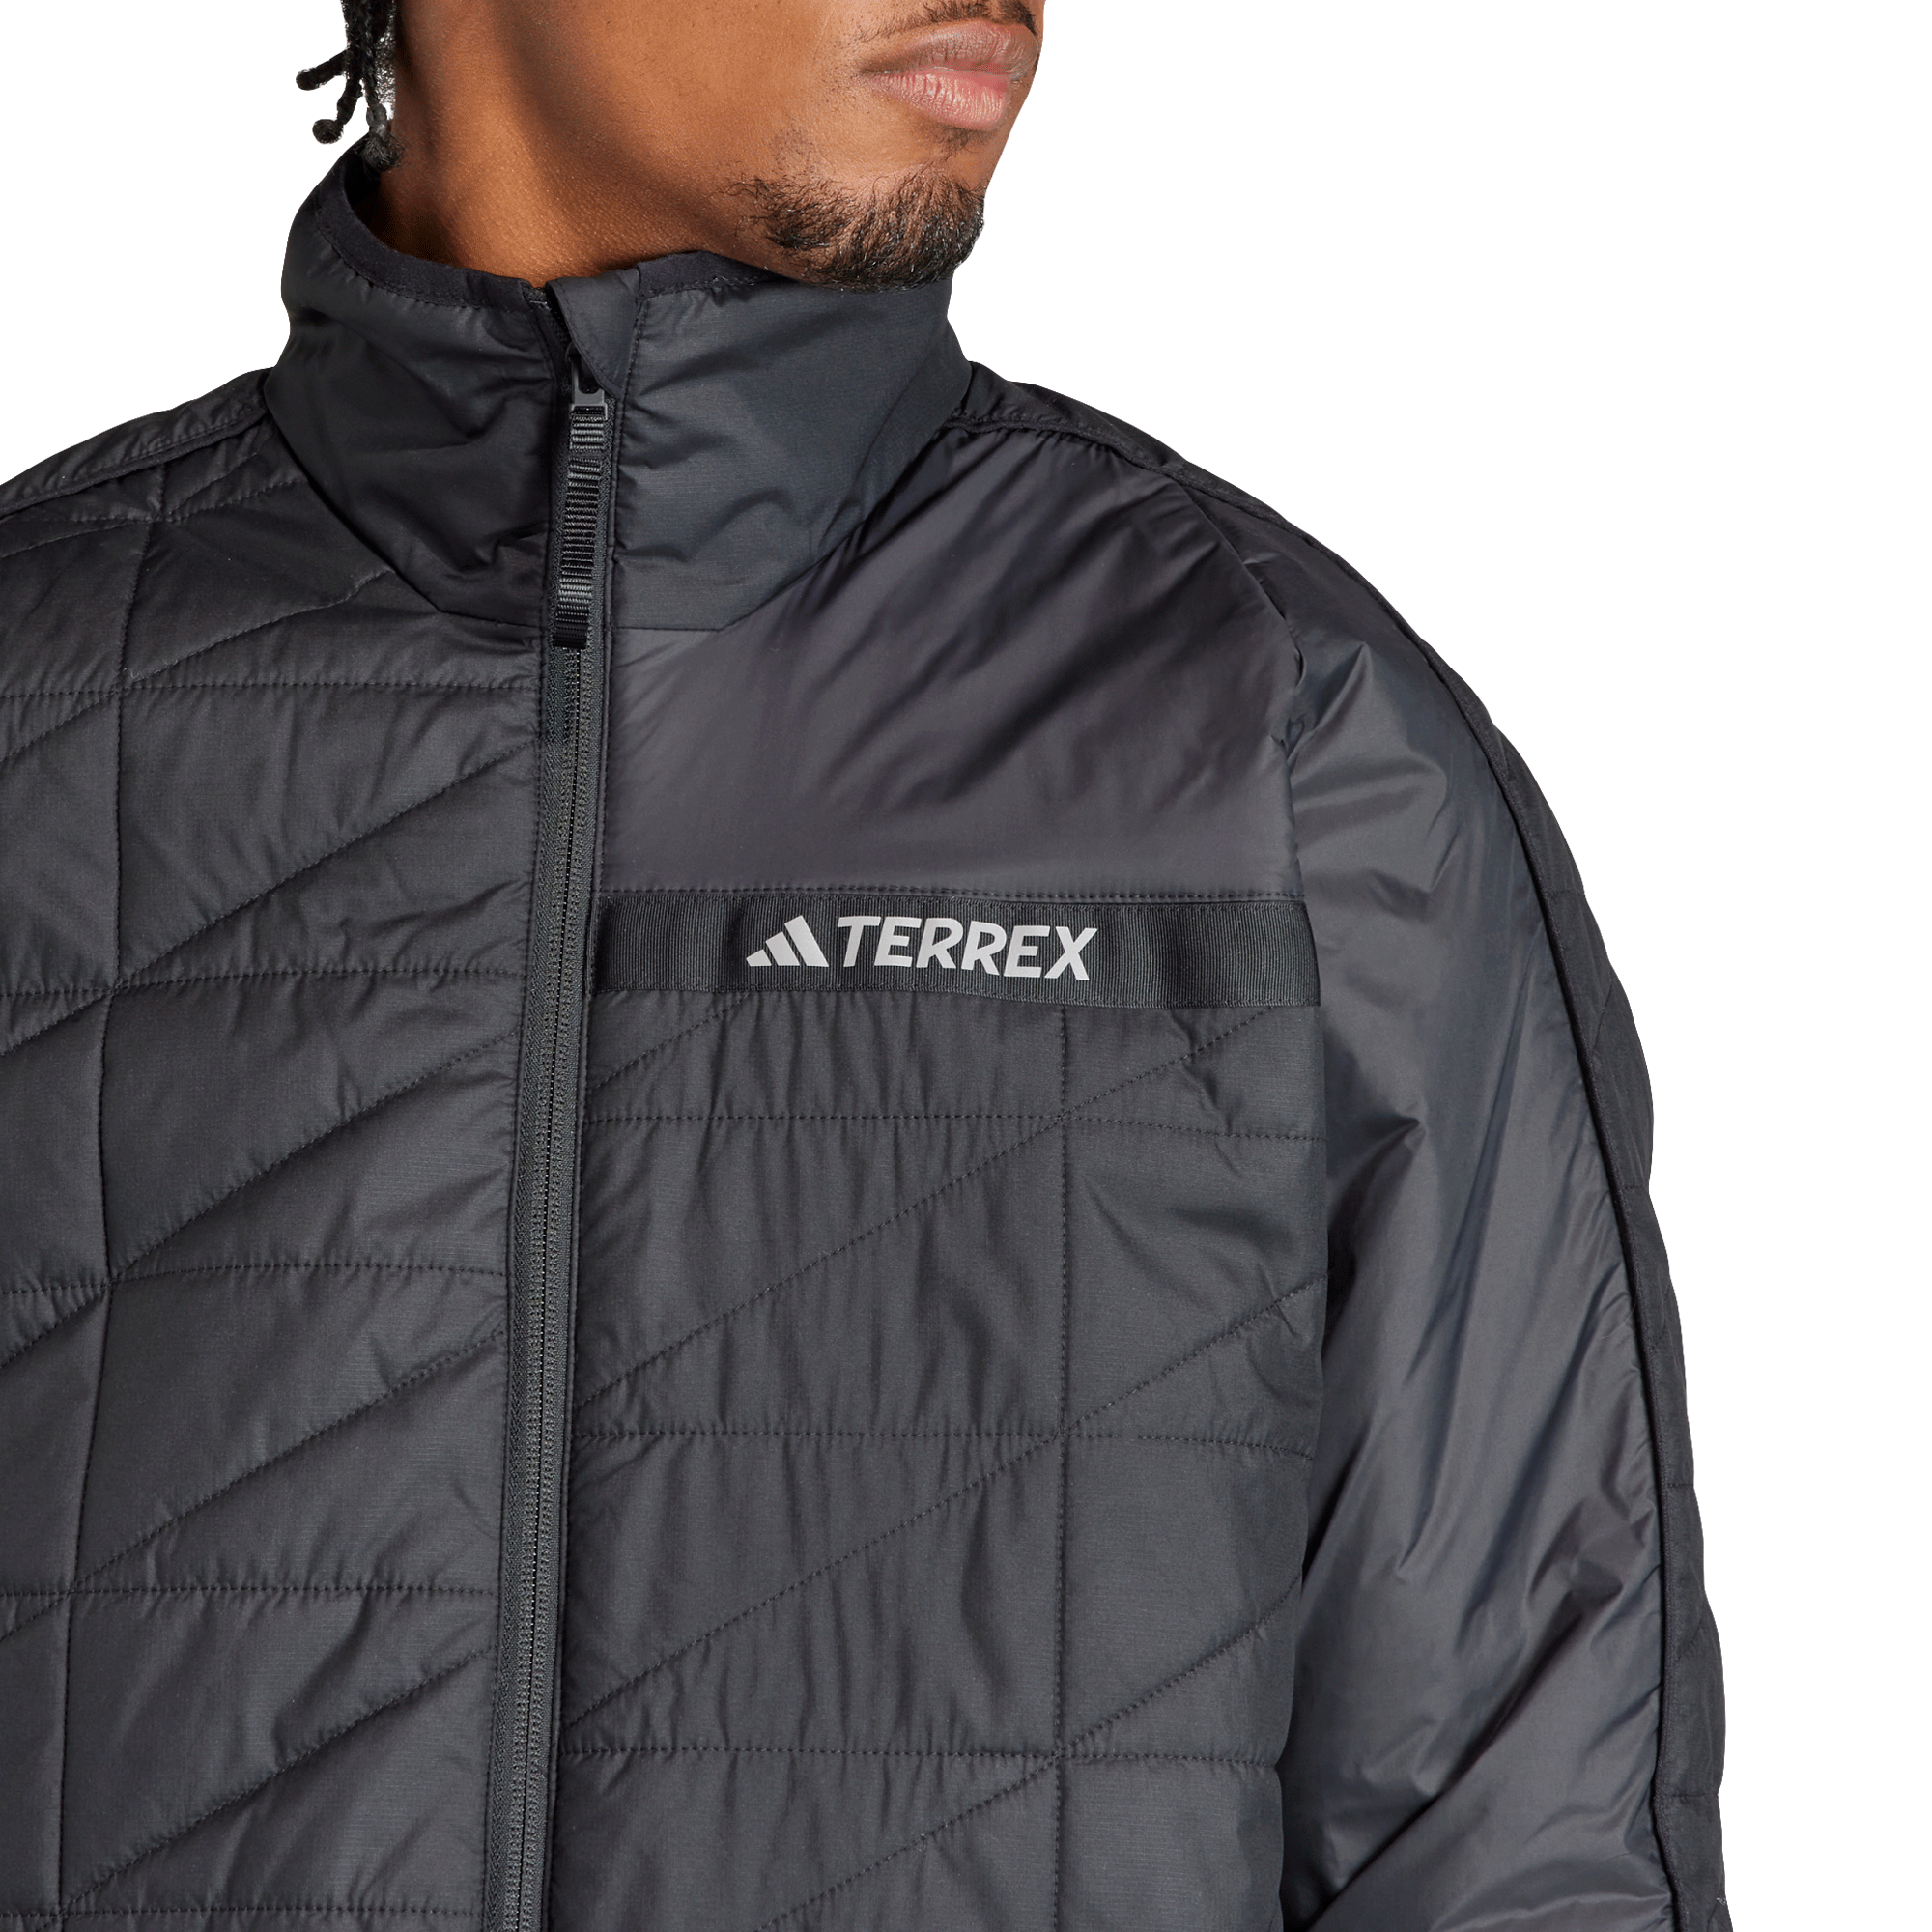 adidas Marathon Warm-up negro chaqueta running hombre